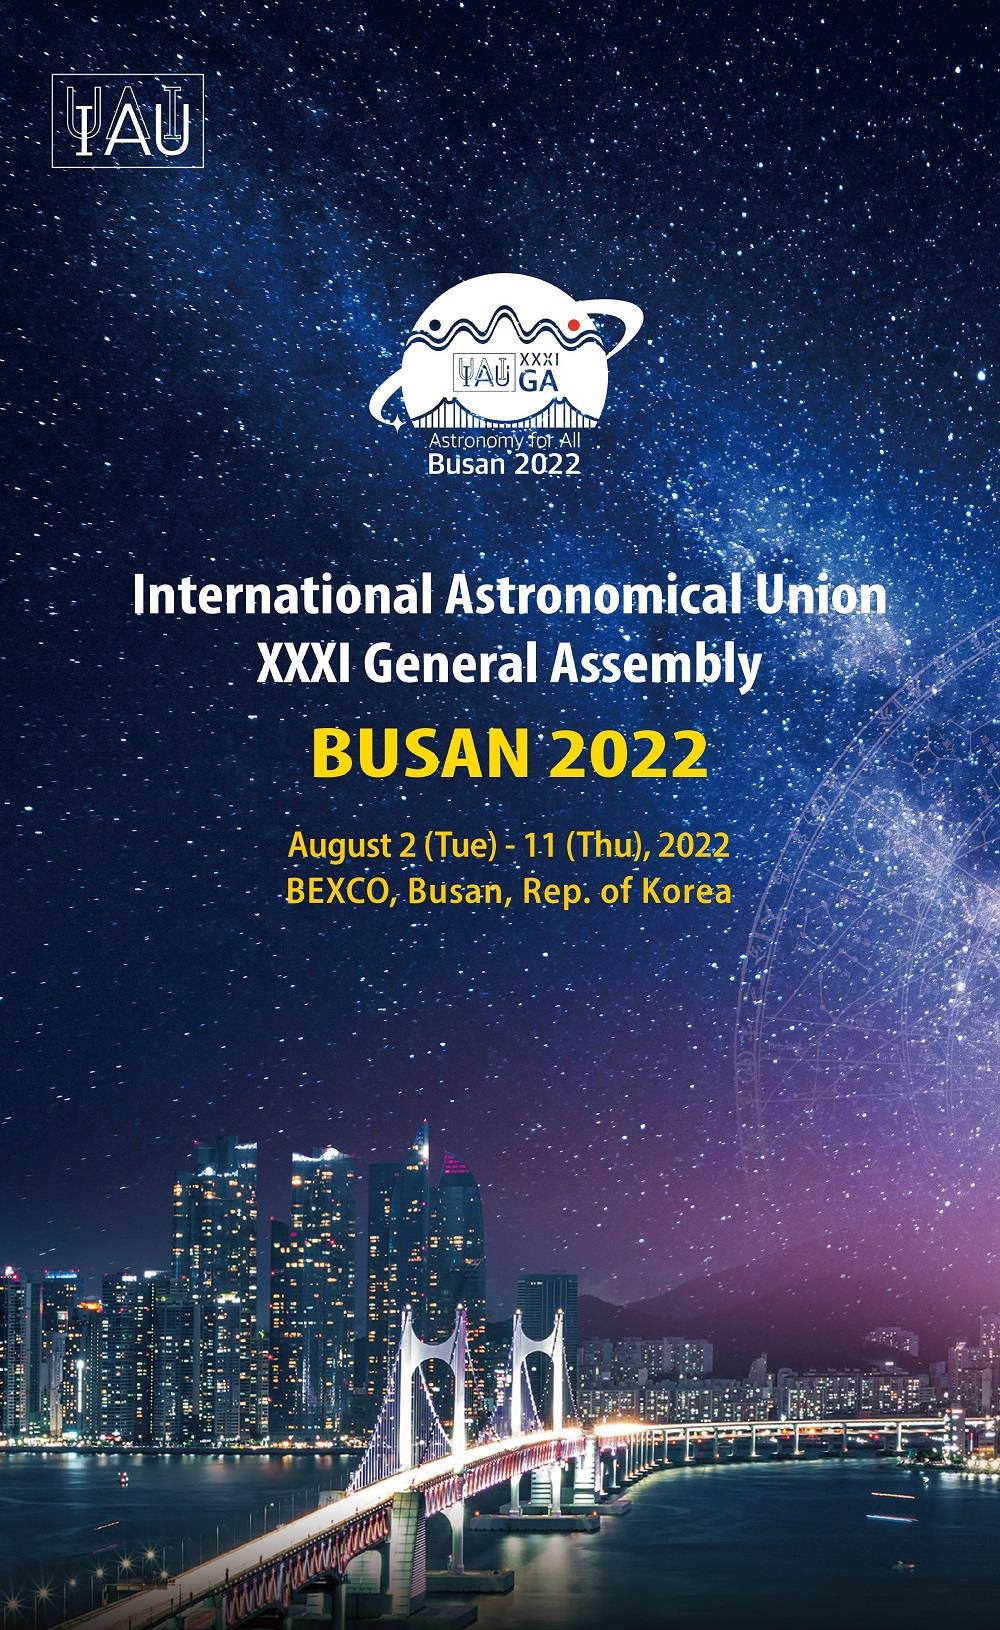 International Astronomical Union (IAU) XXXI General Assembly BUSAN 2022, August 2(Tue) - 11(Thu), 2022, BEXCO, Busan, Rep. of Korea 공식 포스터